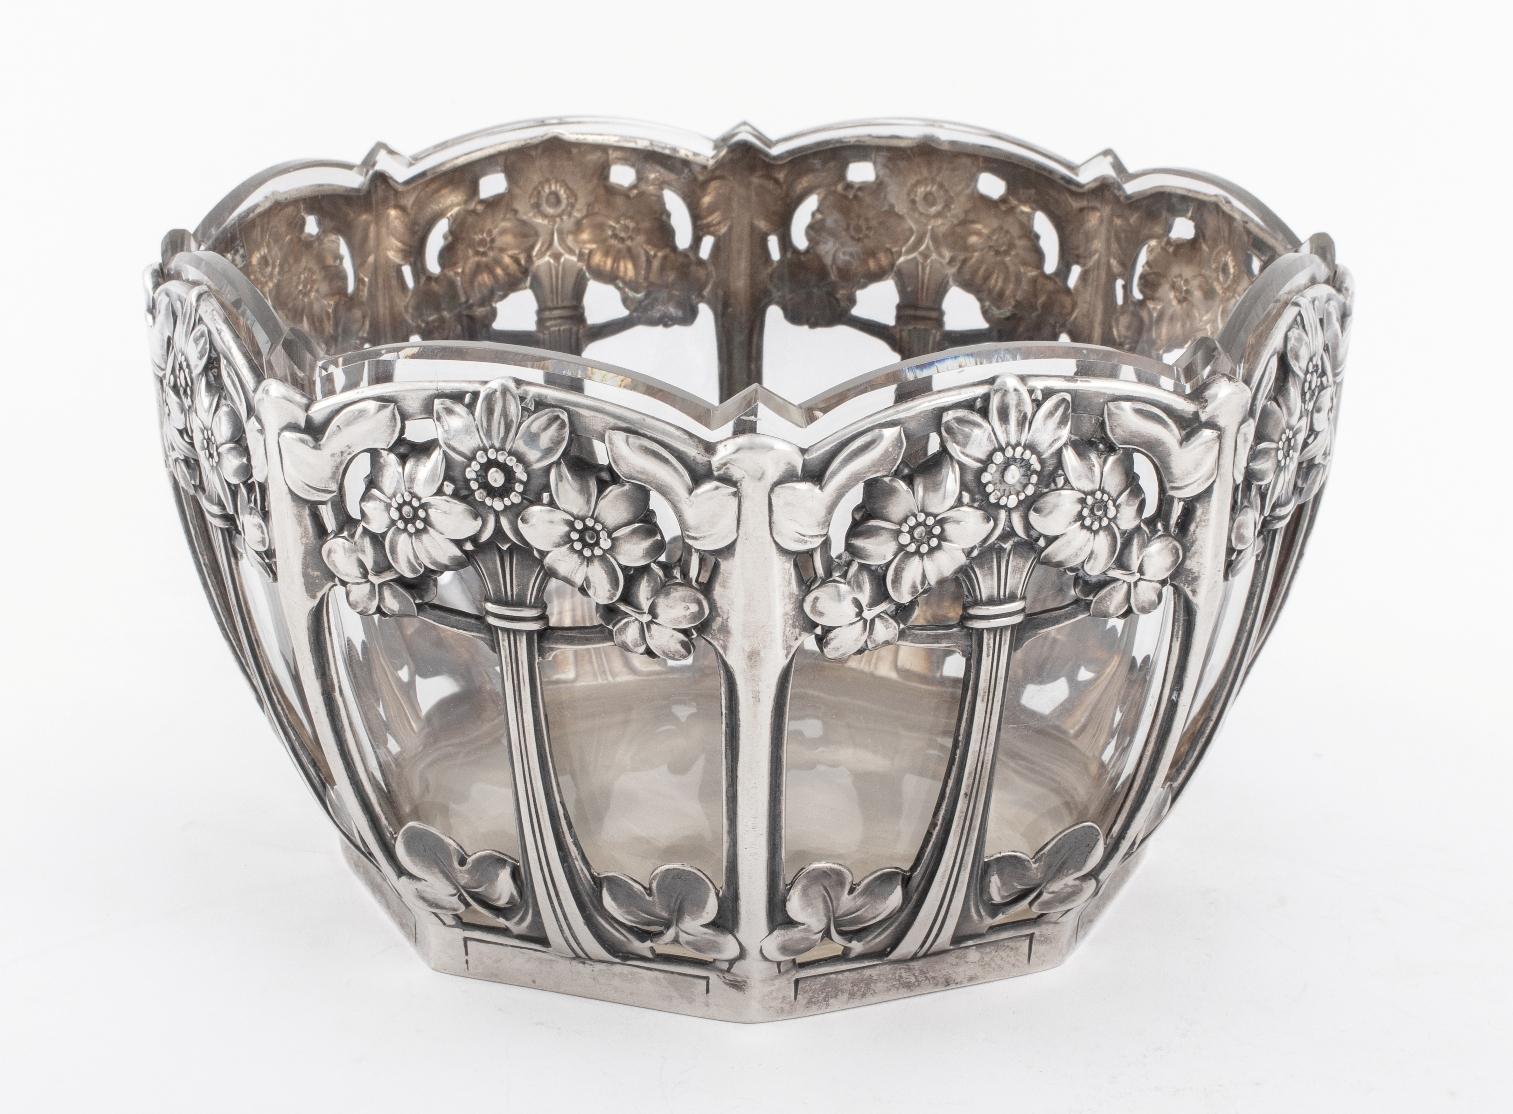 Lazarus Posen Witwe (Germany, 1869-1938) Berlin Jugendstil silver mounted glass bowl, marked 